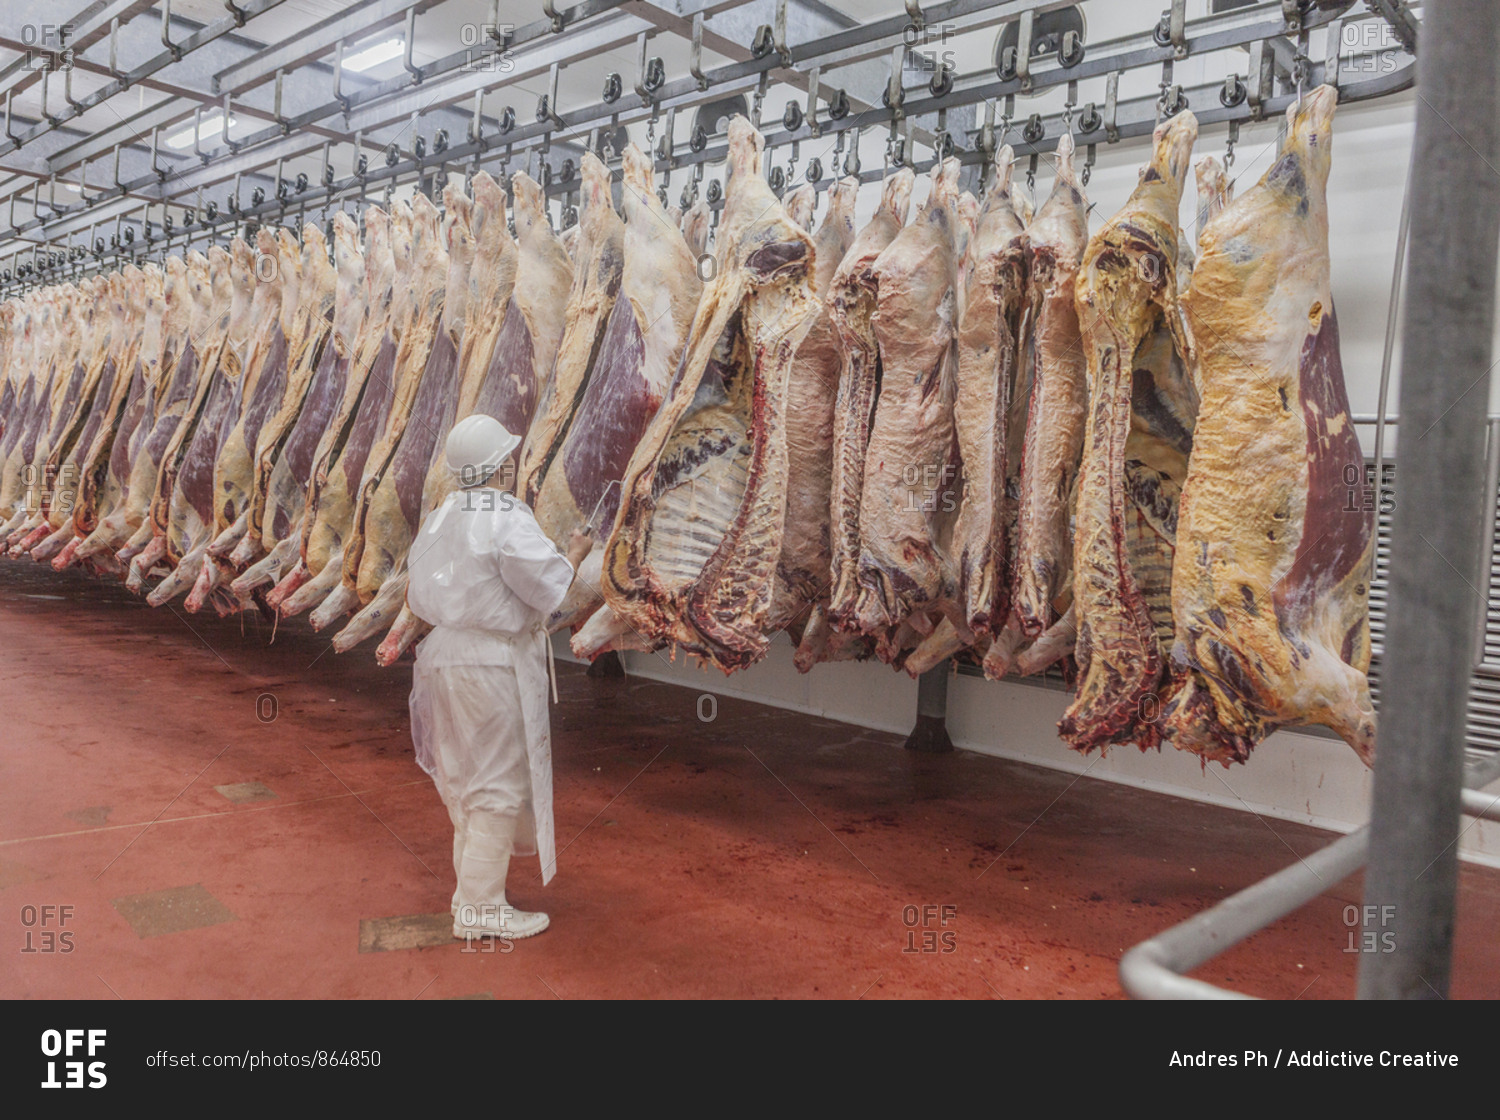 19 fotos de stock e banco de imagens de Halt The Butchery - Getty Images